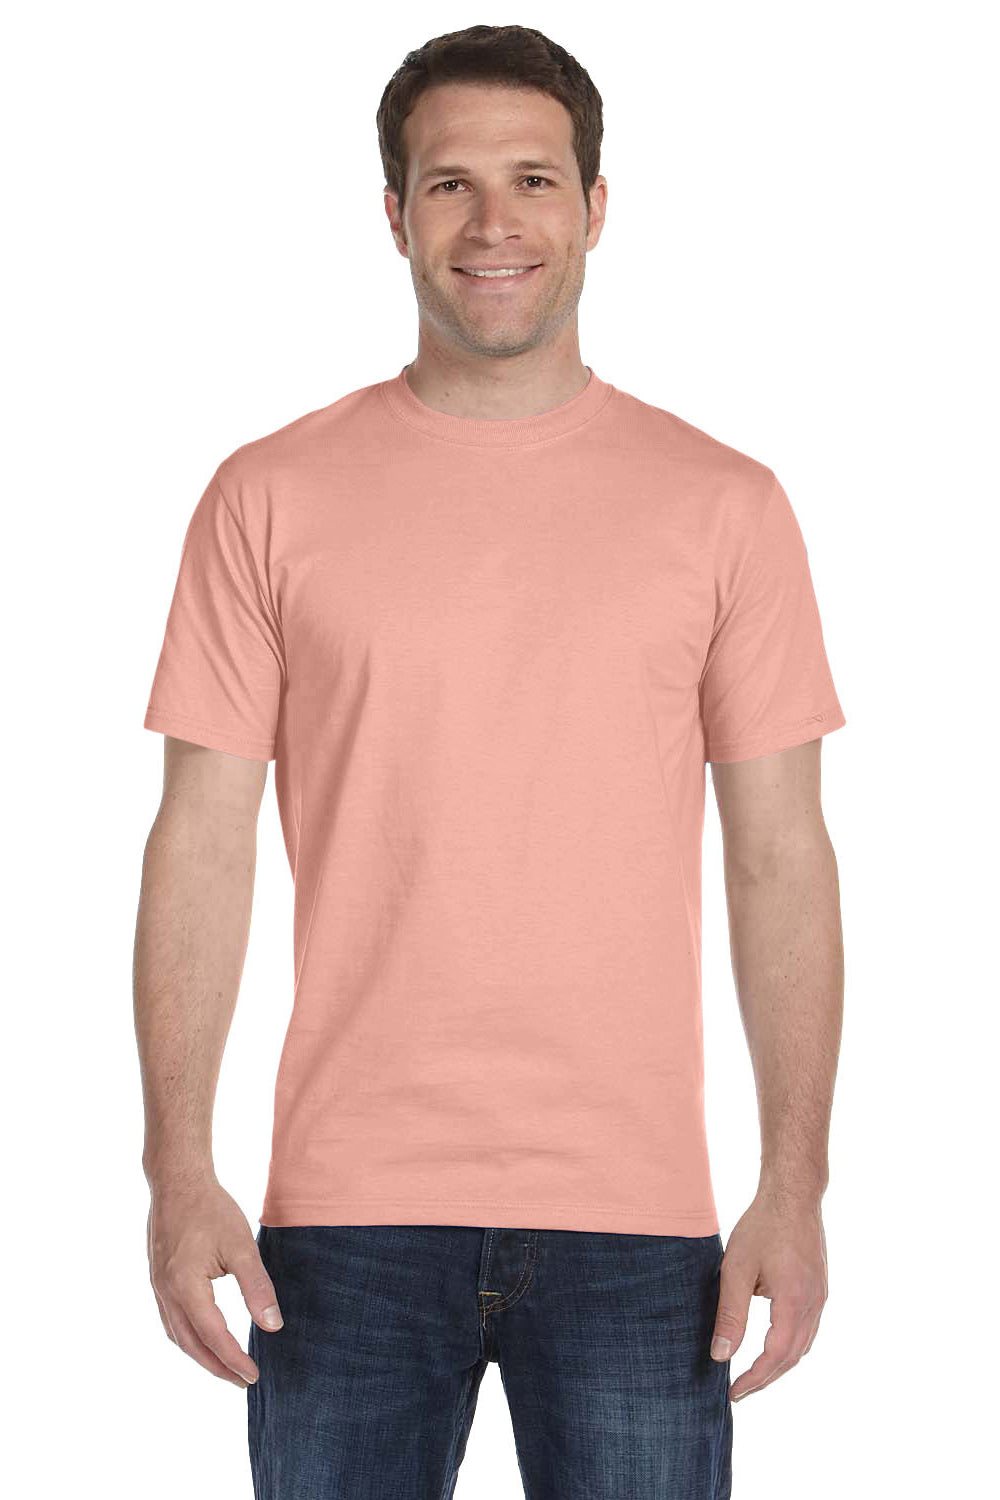 Hanes 5280 Mens ComfortSoft Short Sleeve Crewneck T-Shirt Candy Orange Front